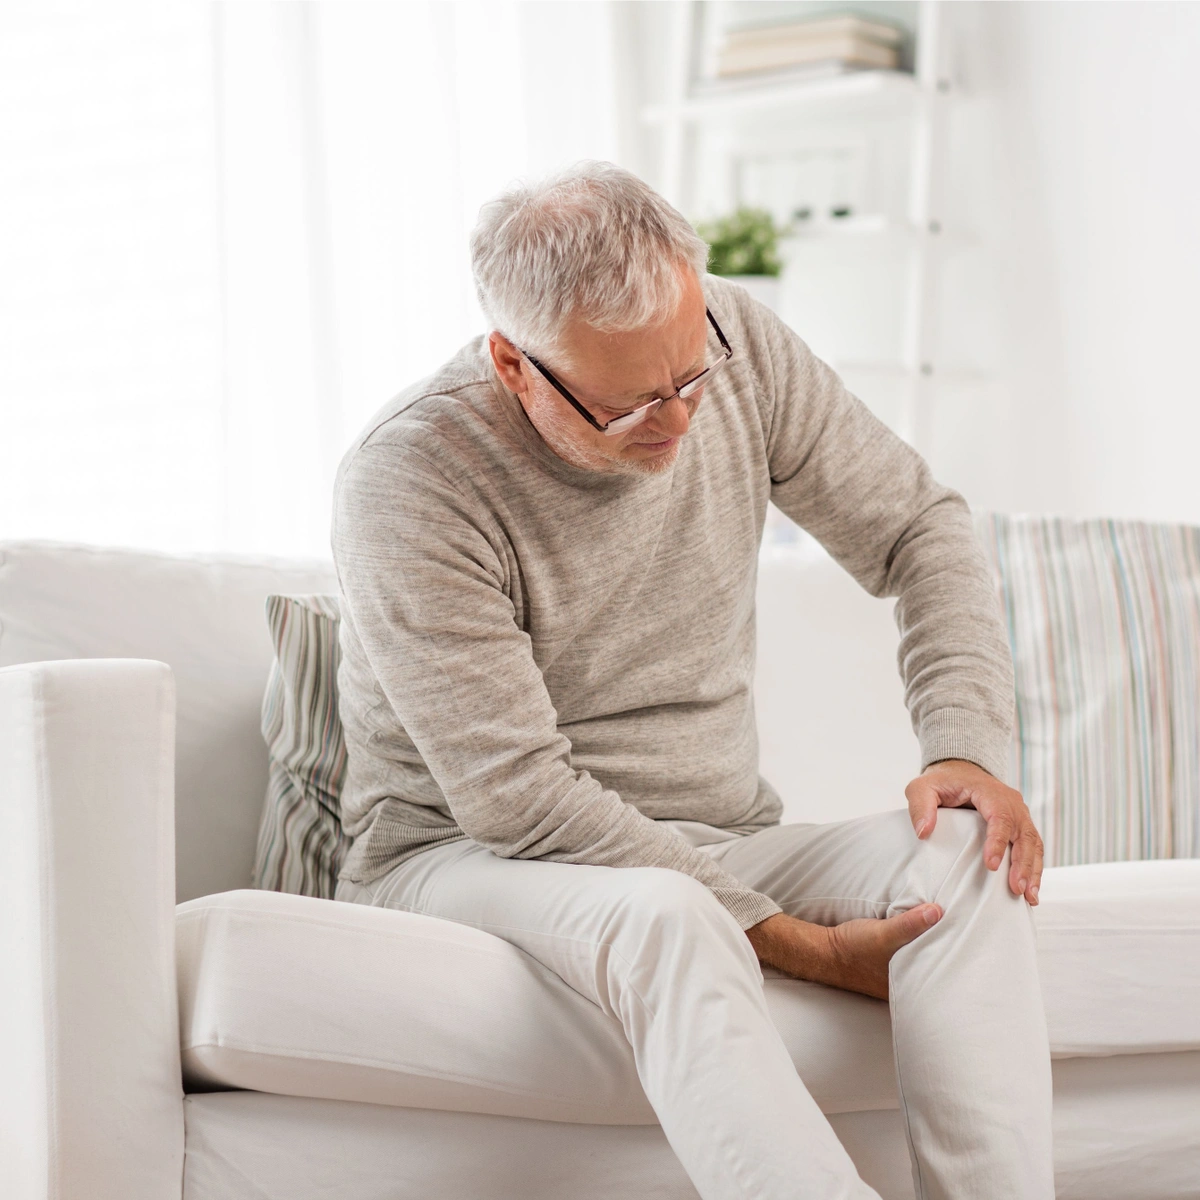 Osteoarthritis Treatment: Build Back Knee Strength